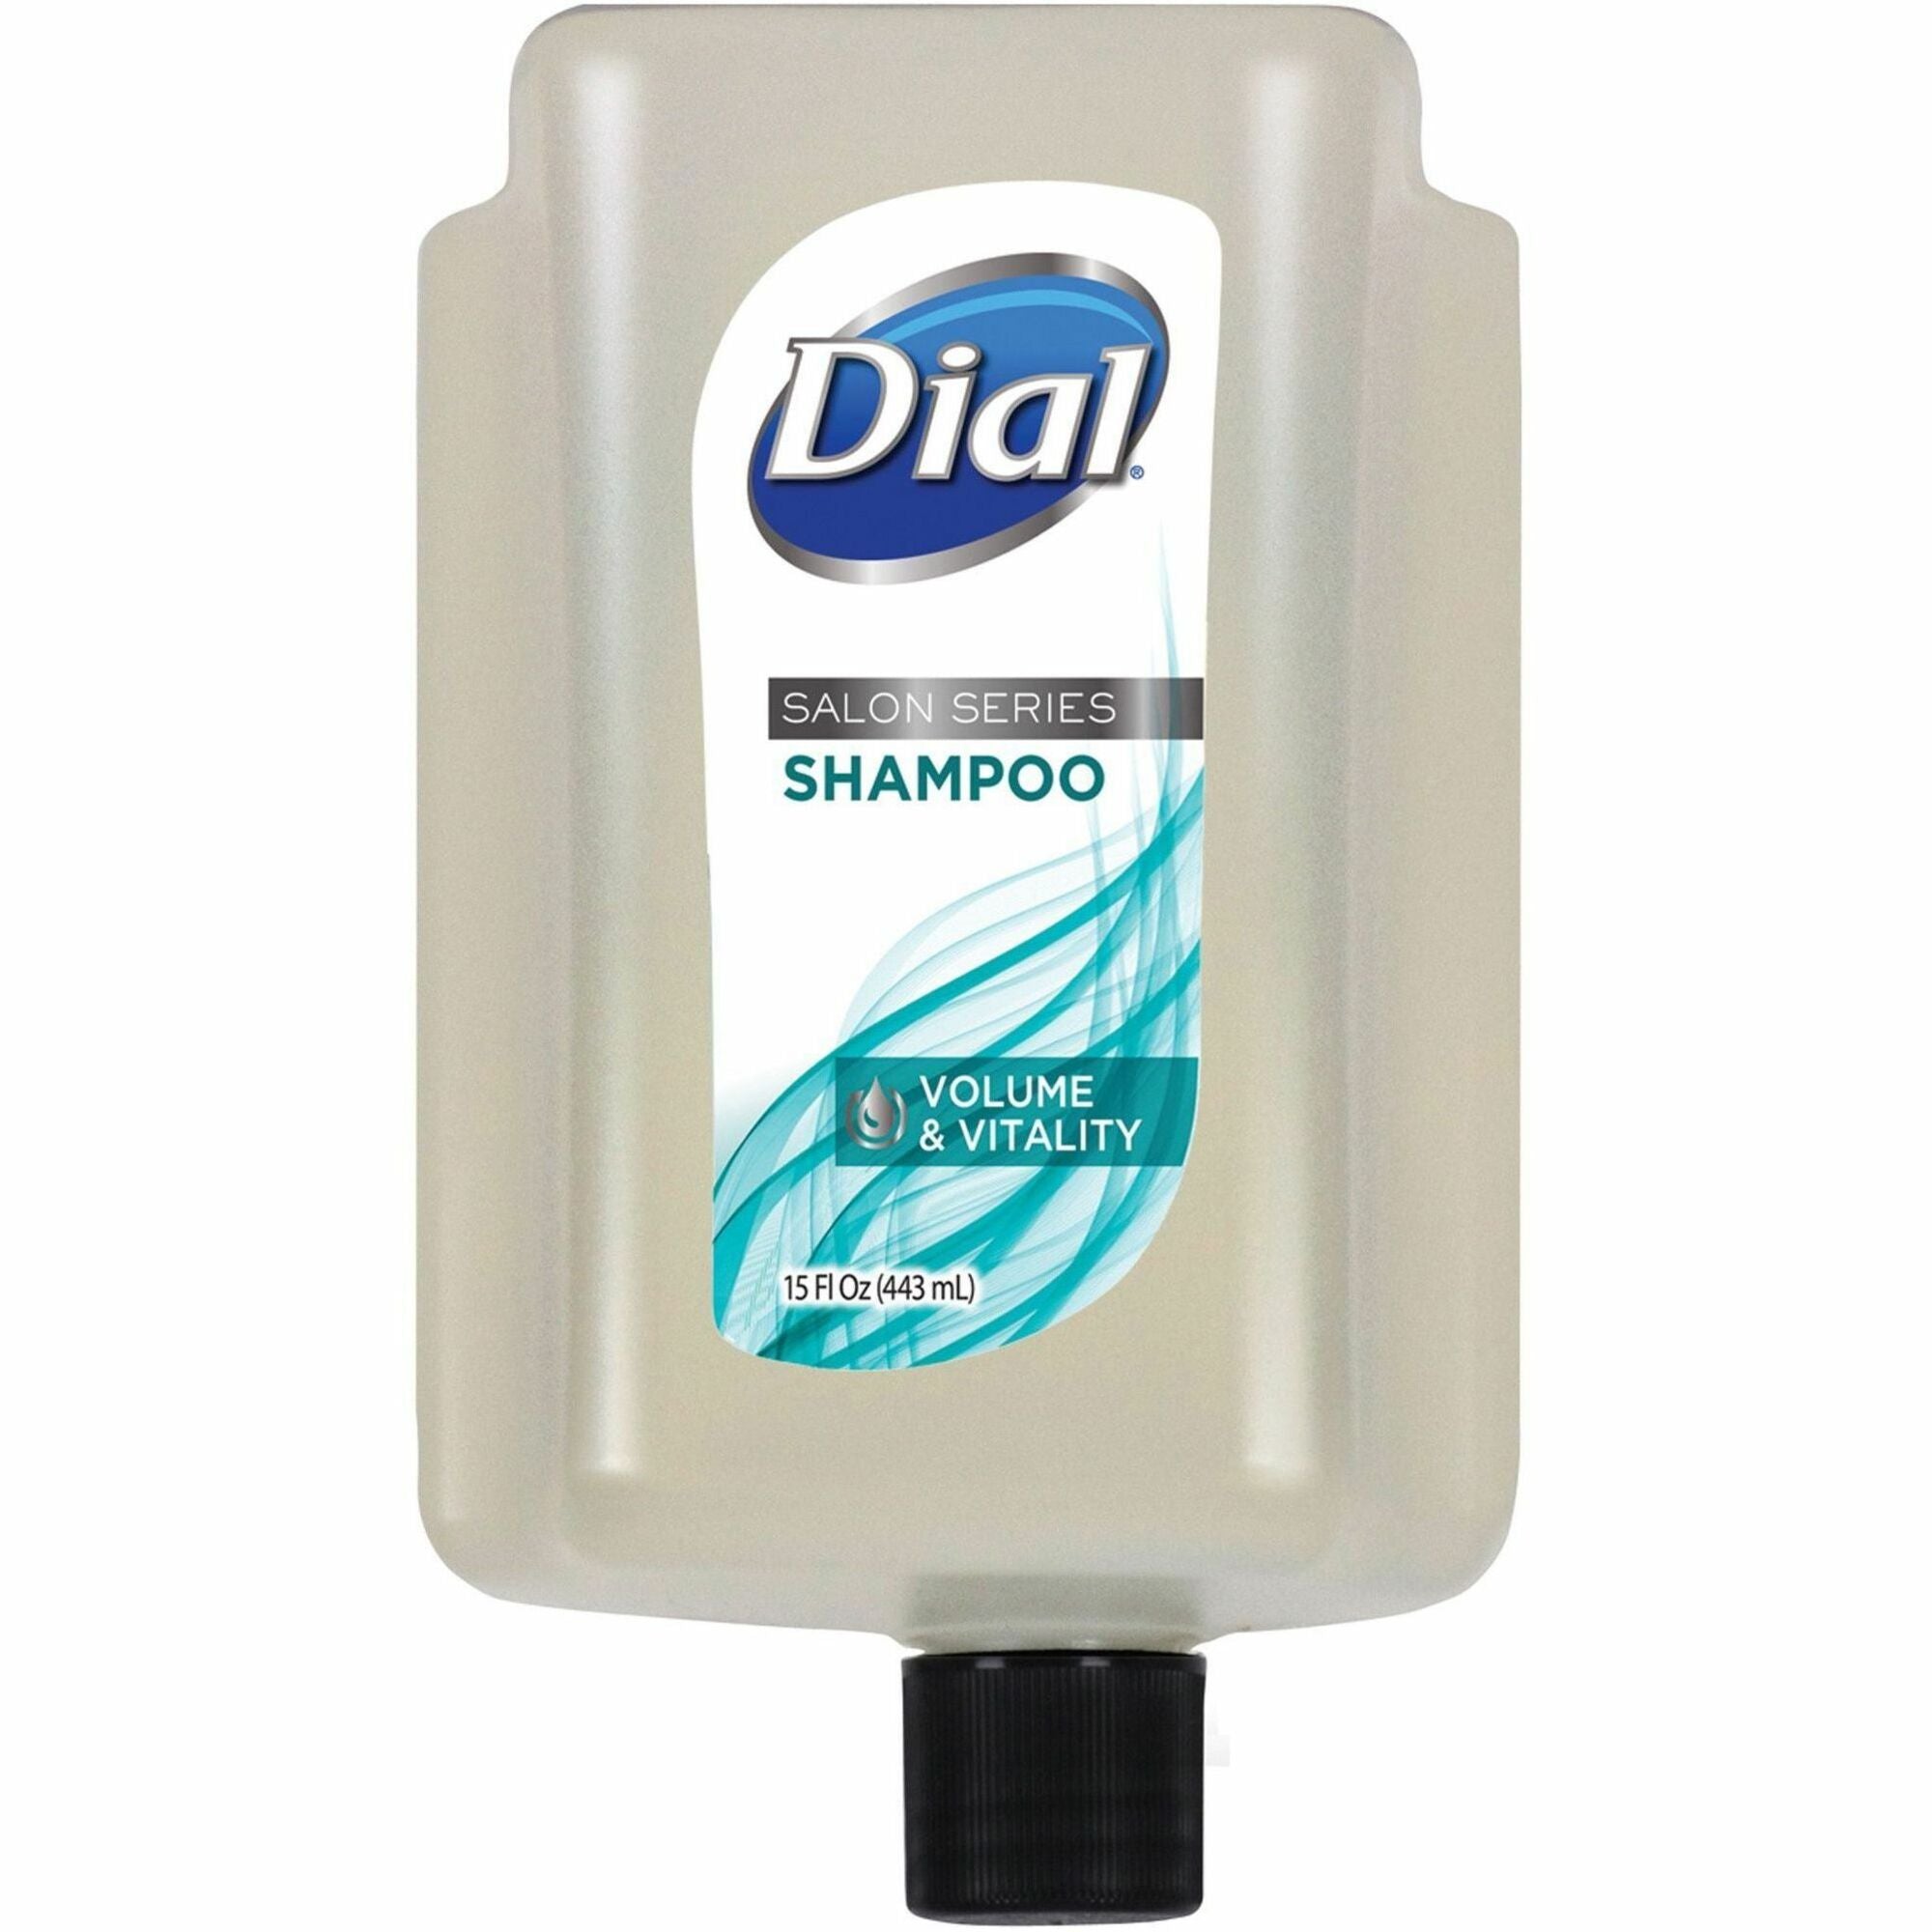 Dial Versa Salon Series Shampoo Refill - 15 fl oz (443.6 mL) - Bottle Dispenser - Hand - White - 1 Each